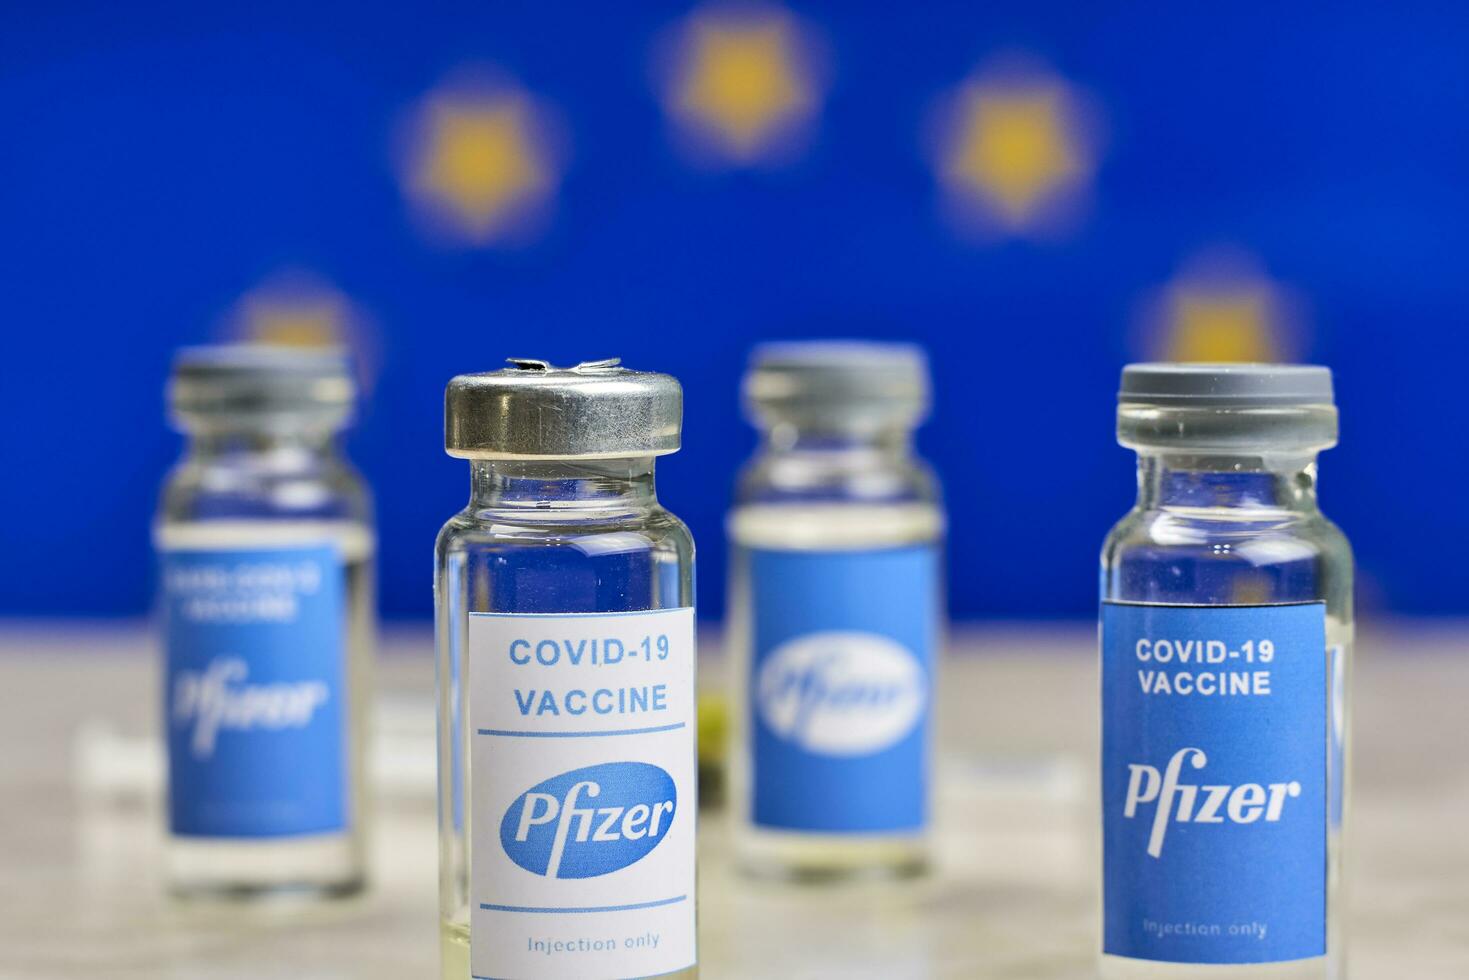 Pfizer Covid-19 vaccine trials. United Kingdom government rollout mass immunization against coronavirus photo